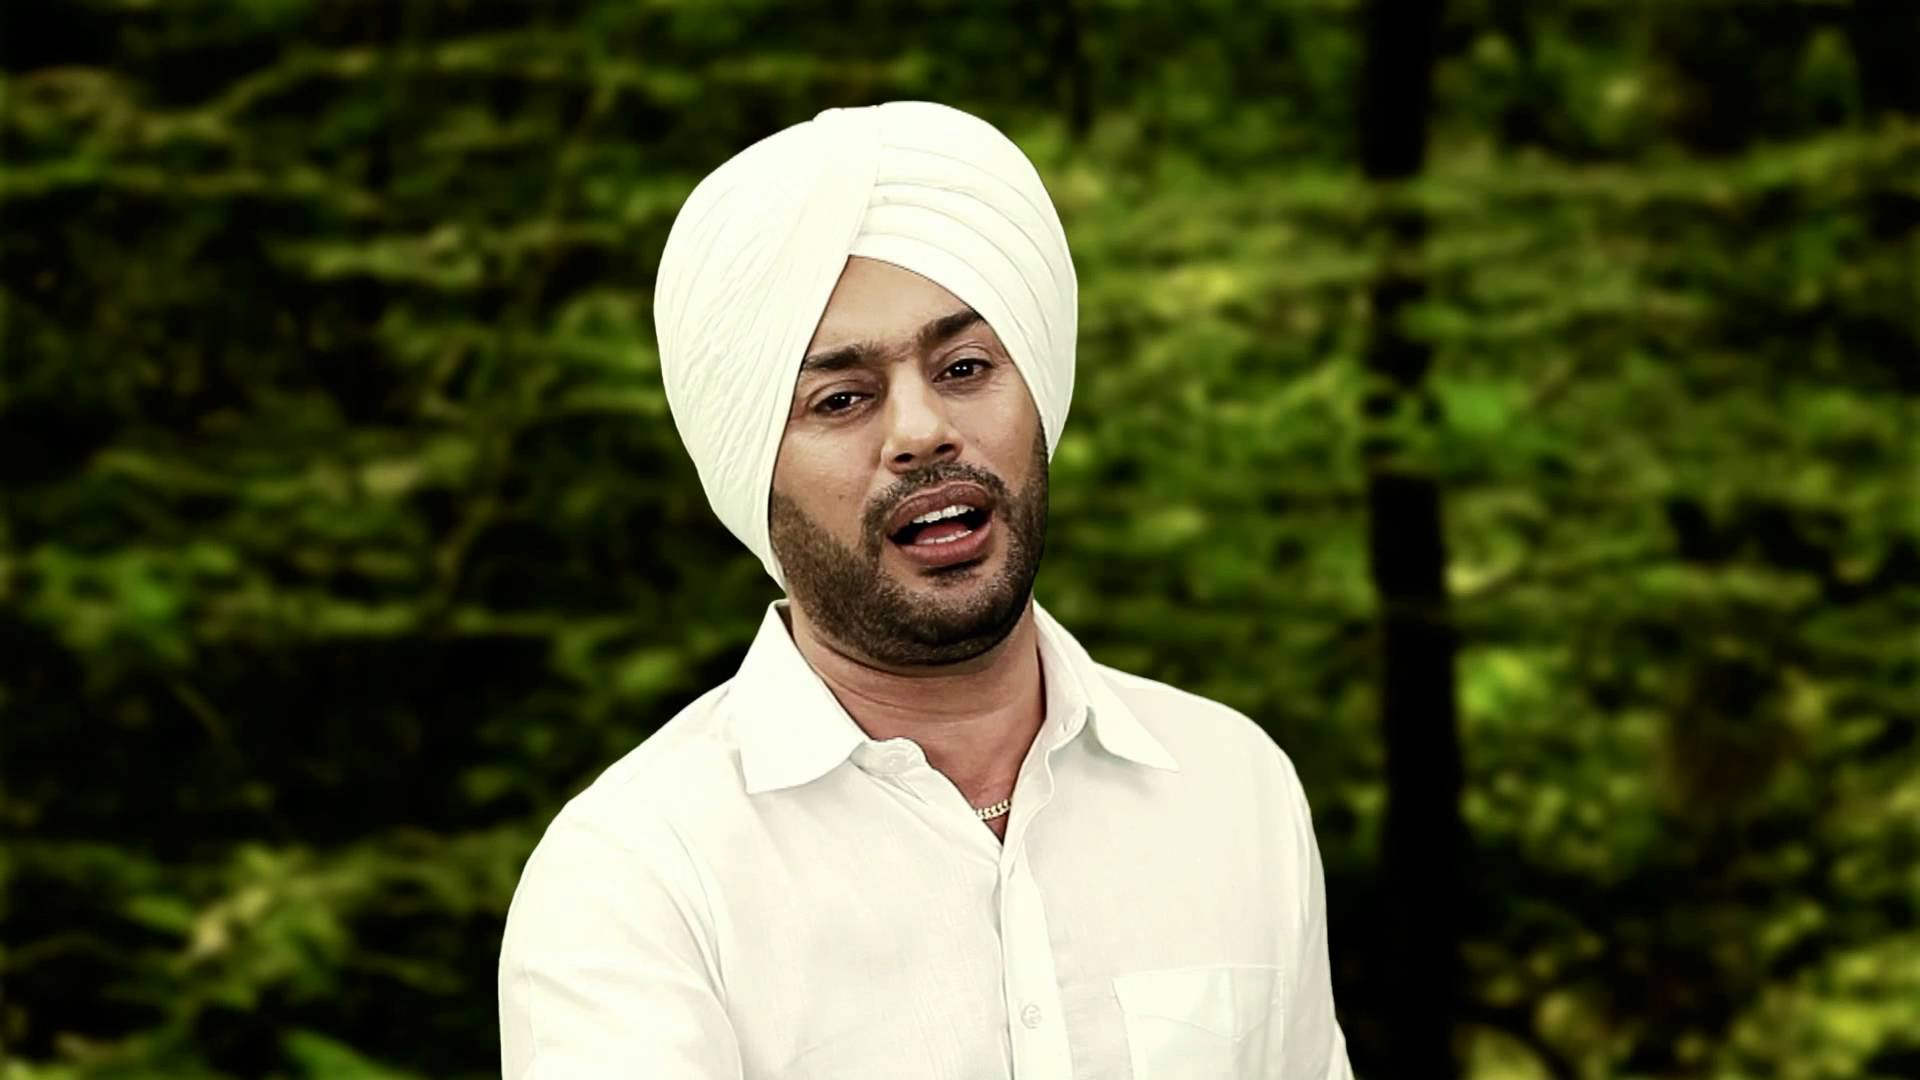 Rai Jujhar Wearing White Turban